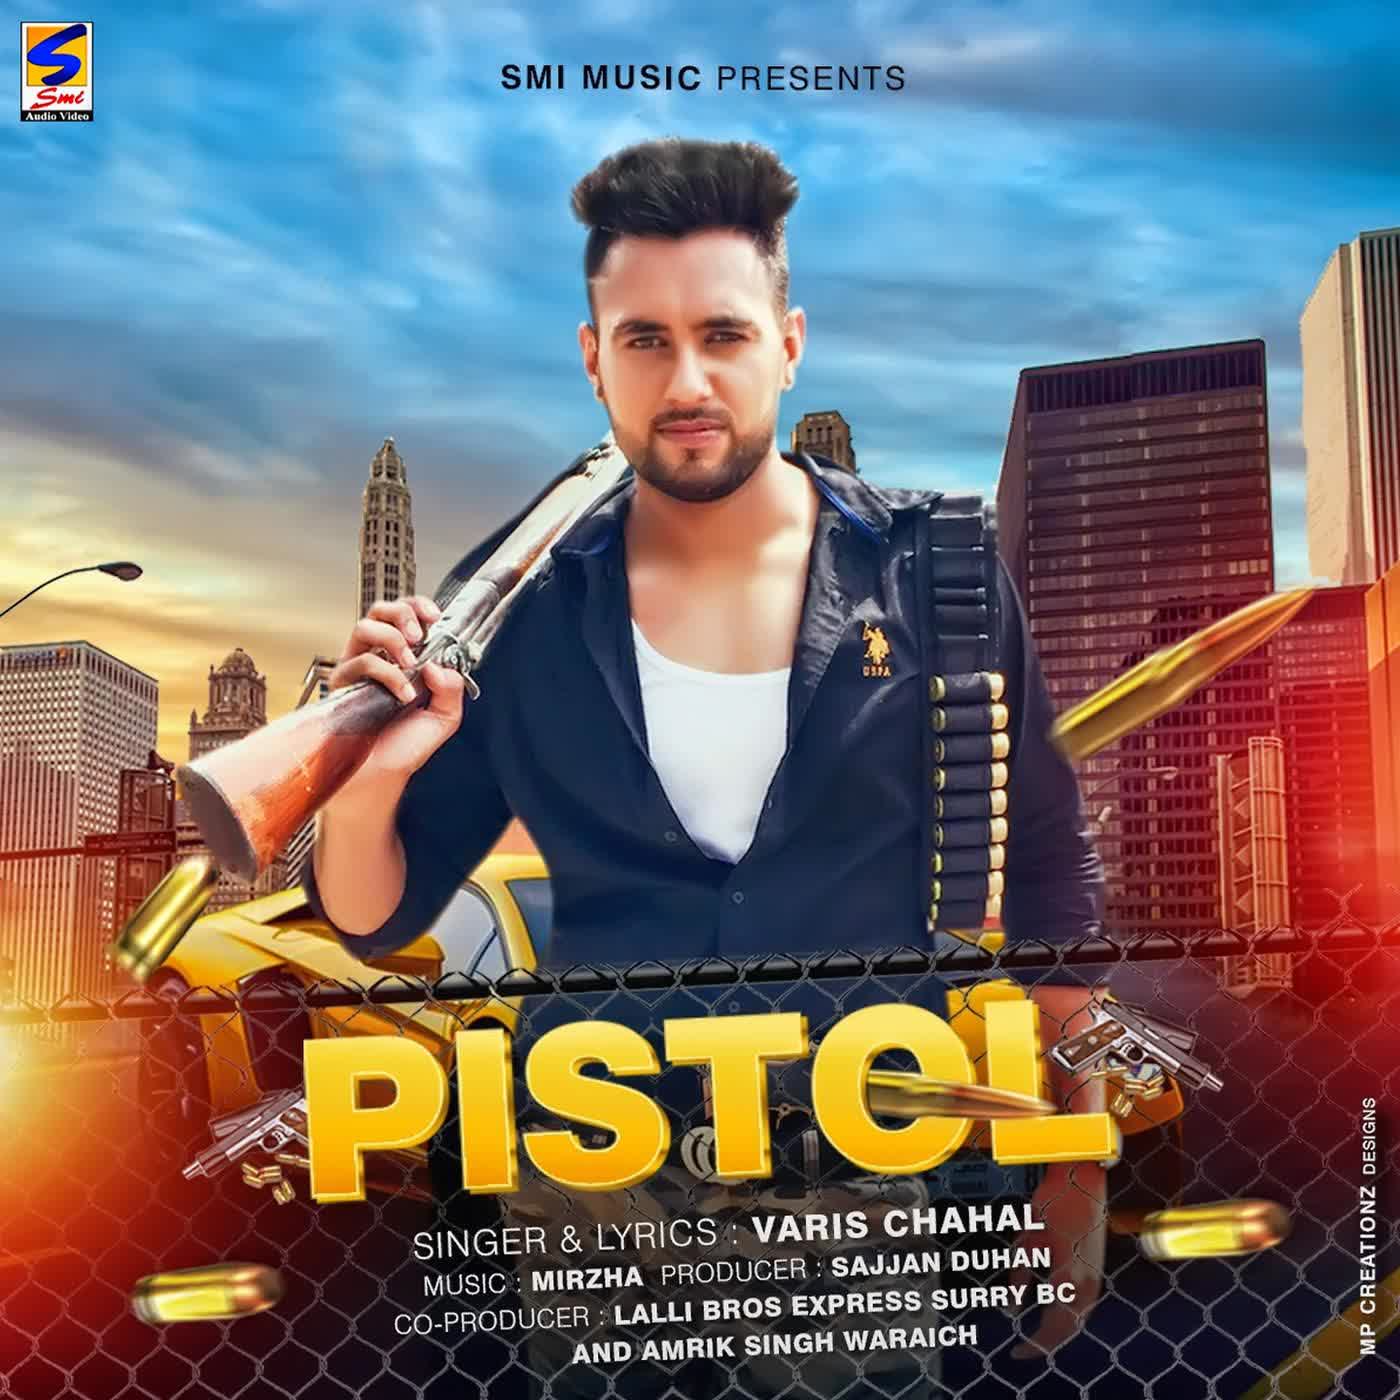 Pistol Varis Chahal  Mp3 song download